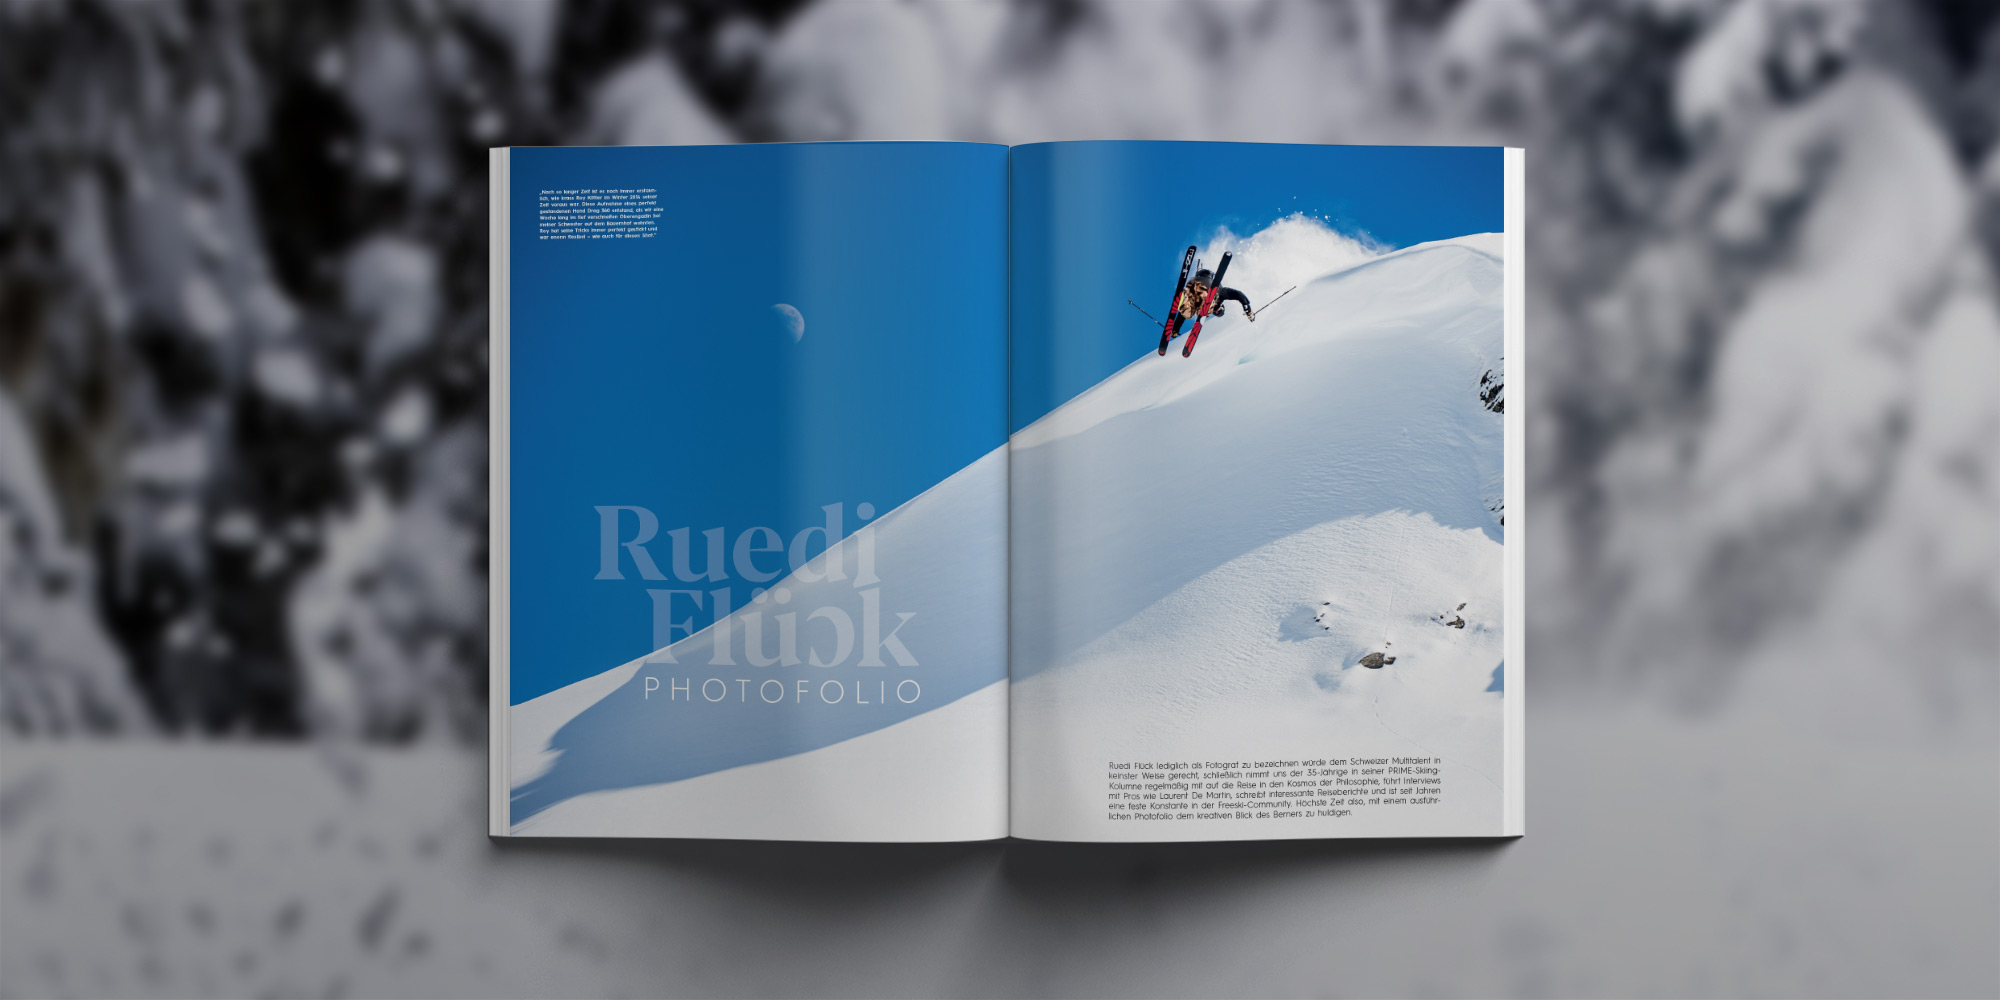 PRIME Skiing #31 Artikel Highlights: Photofolio – Ruedi Flück